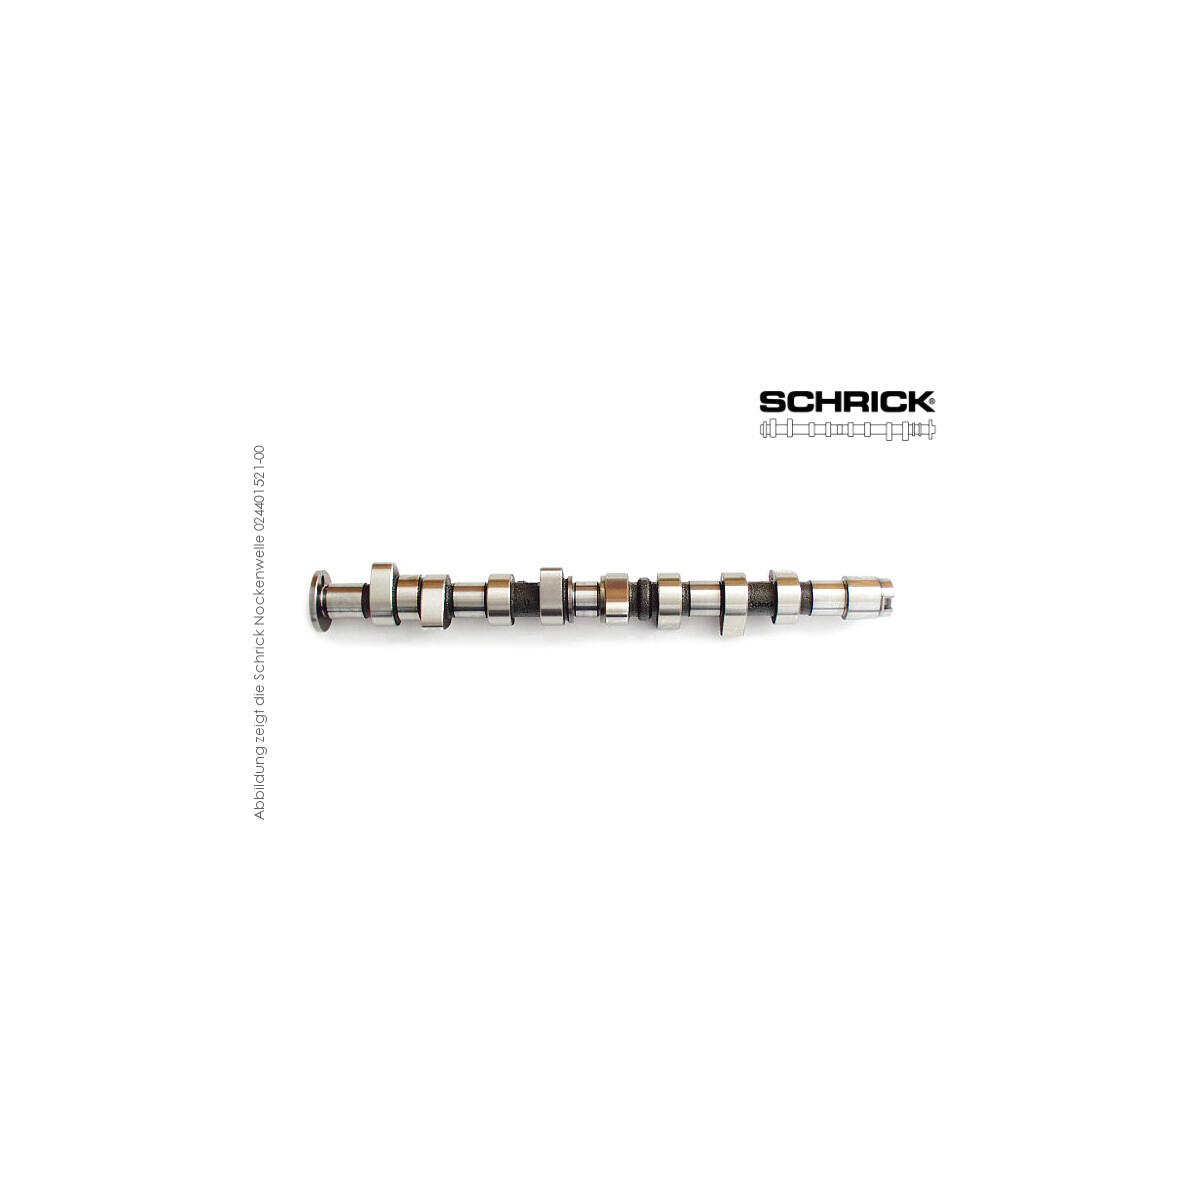 Schrick Nockenwelle für VW Golf 4 V6 | 2,8L 24V 6-Zyl. , Rollenhebel, V6, 24V | 252° Auslassnockenwelle (Schrick 0389A1521-00)